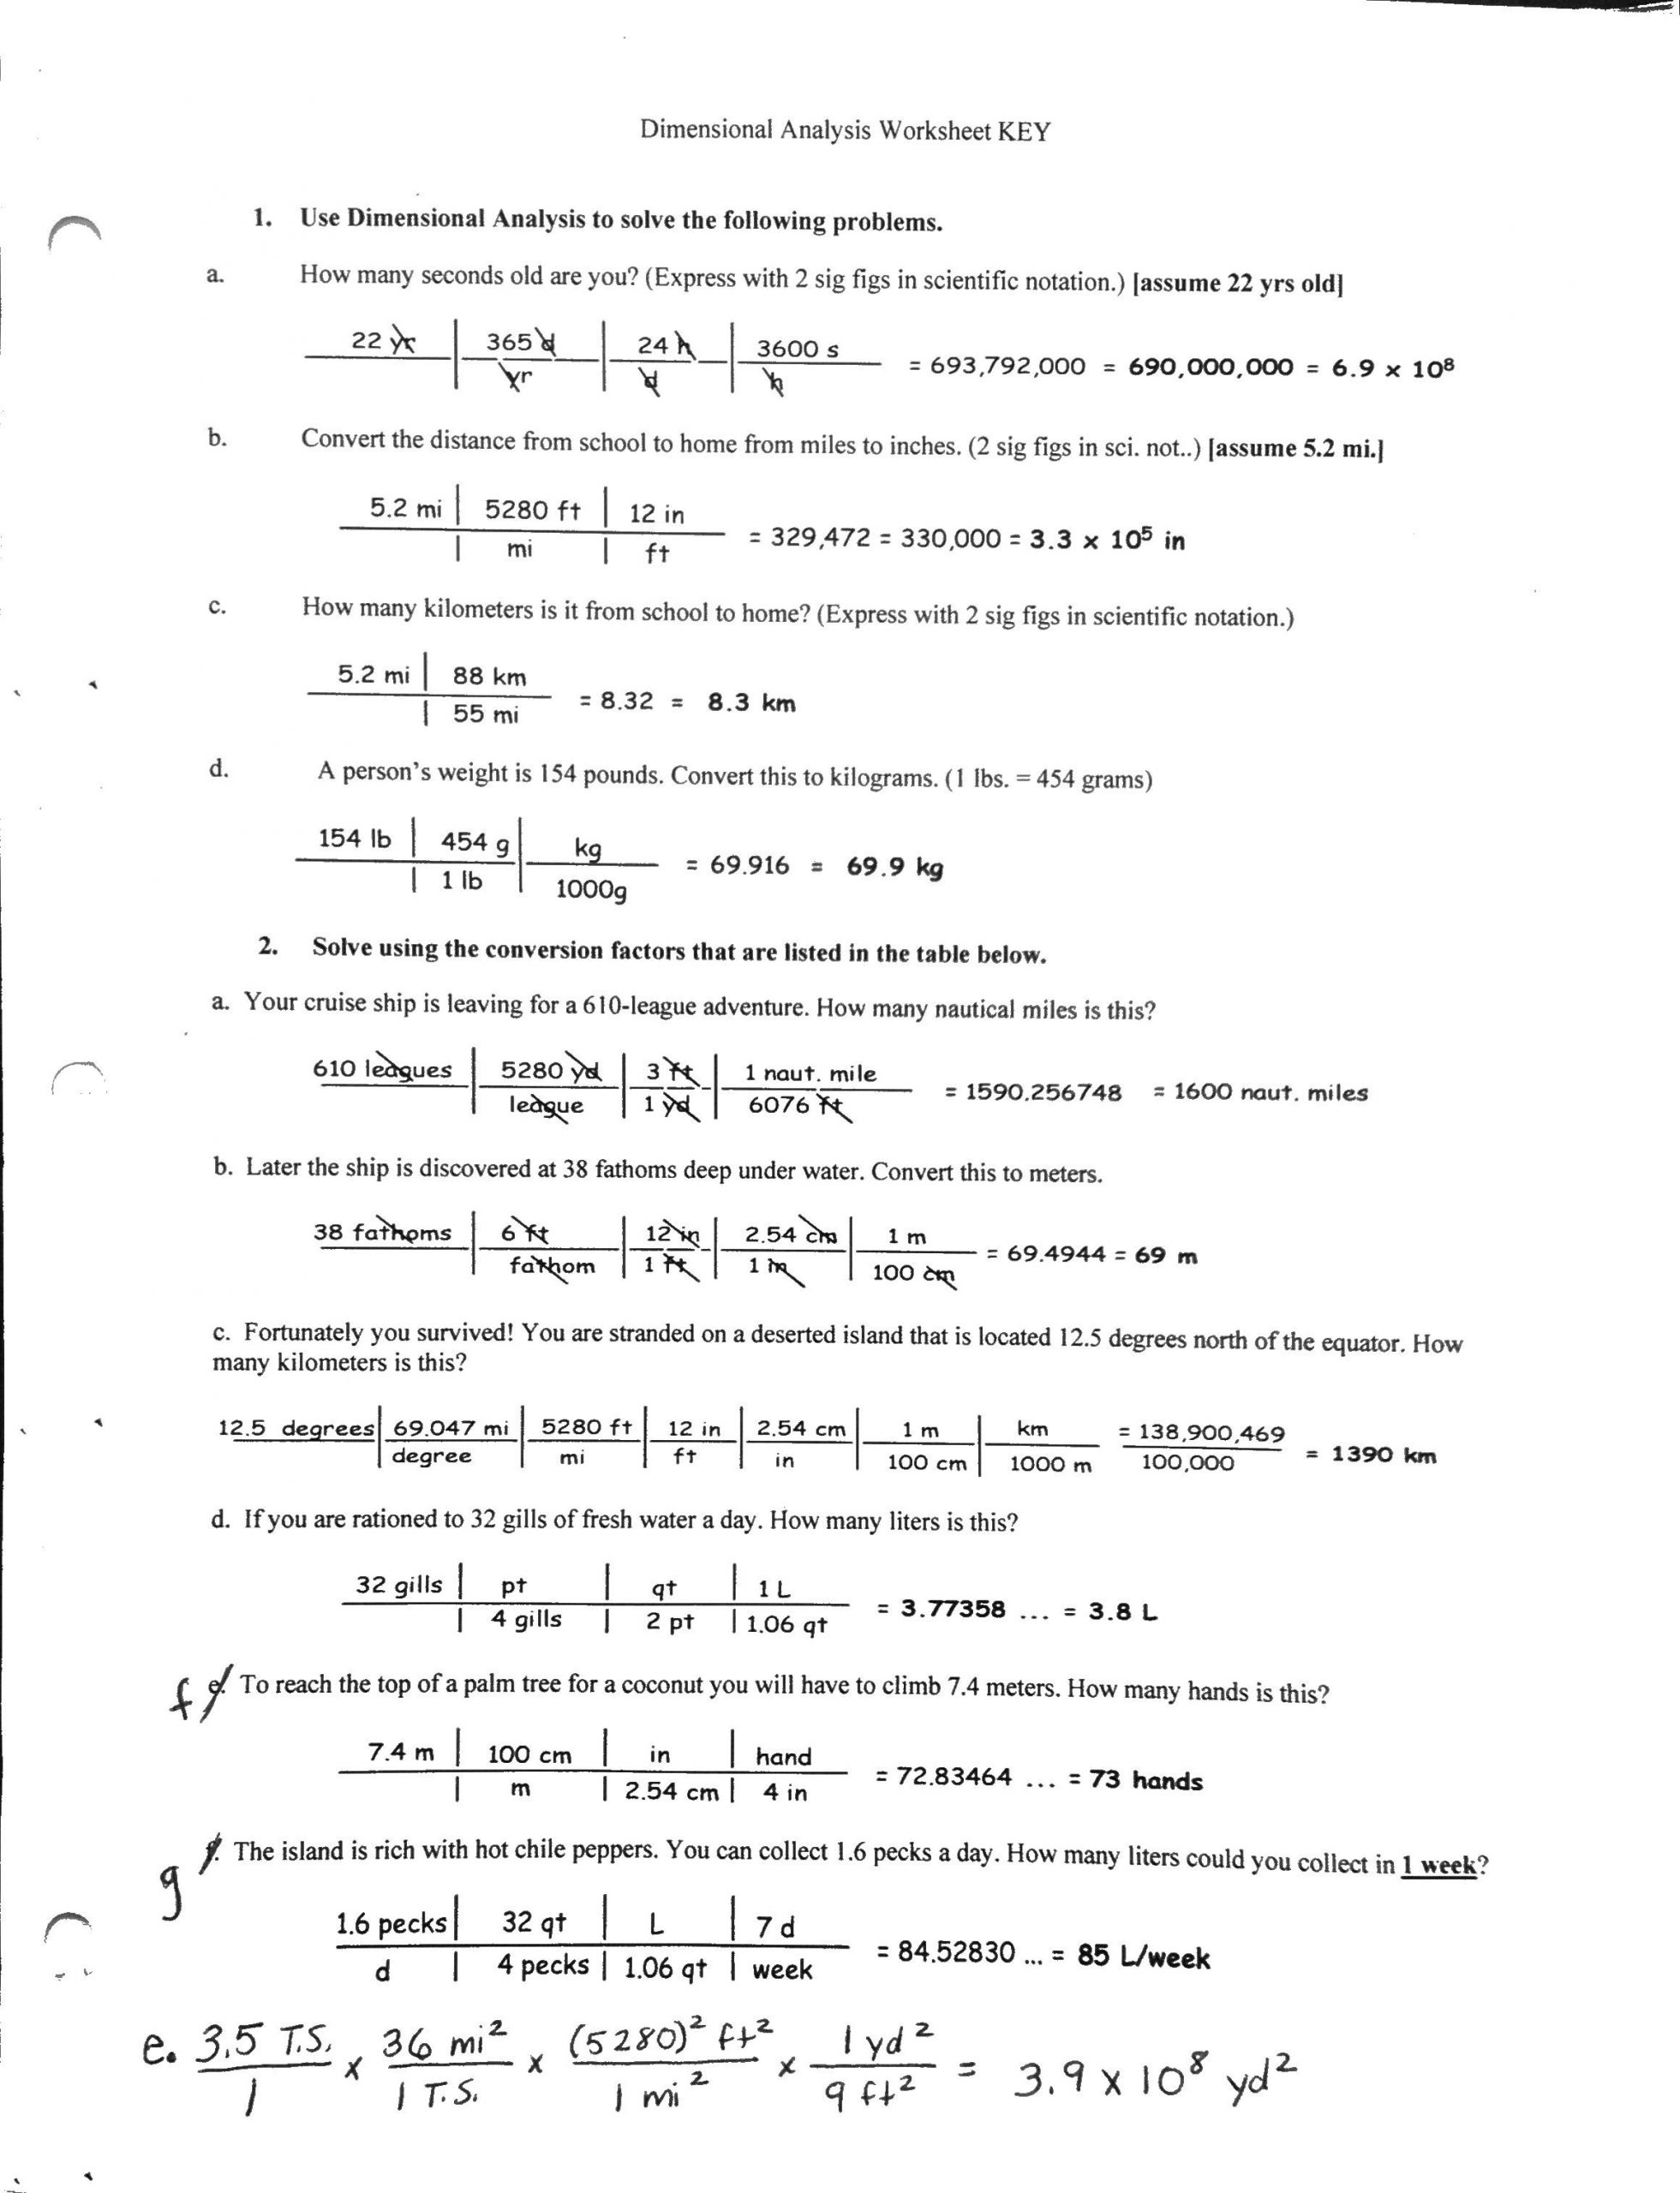 Dimensional Analysis Problems Worksheet 29 Chemistry Dimensional Analysis Worksheet Answers